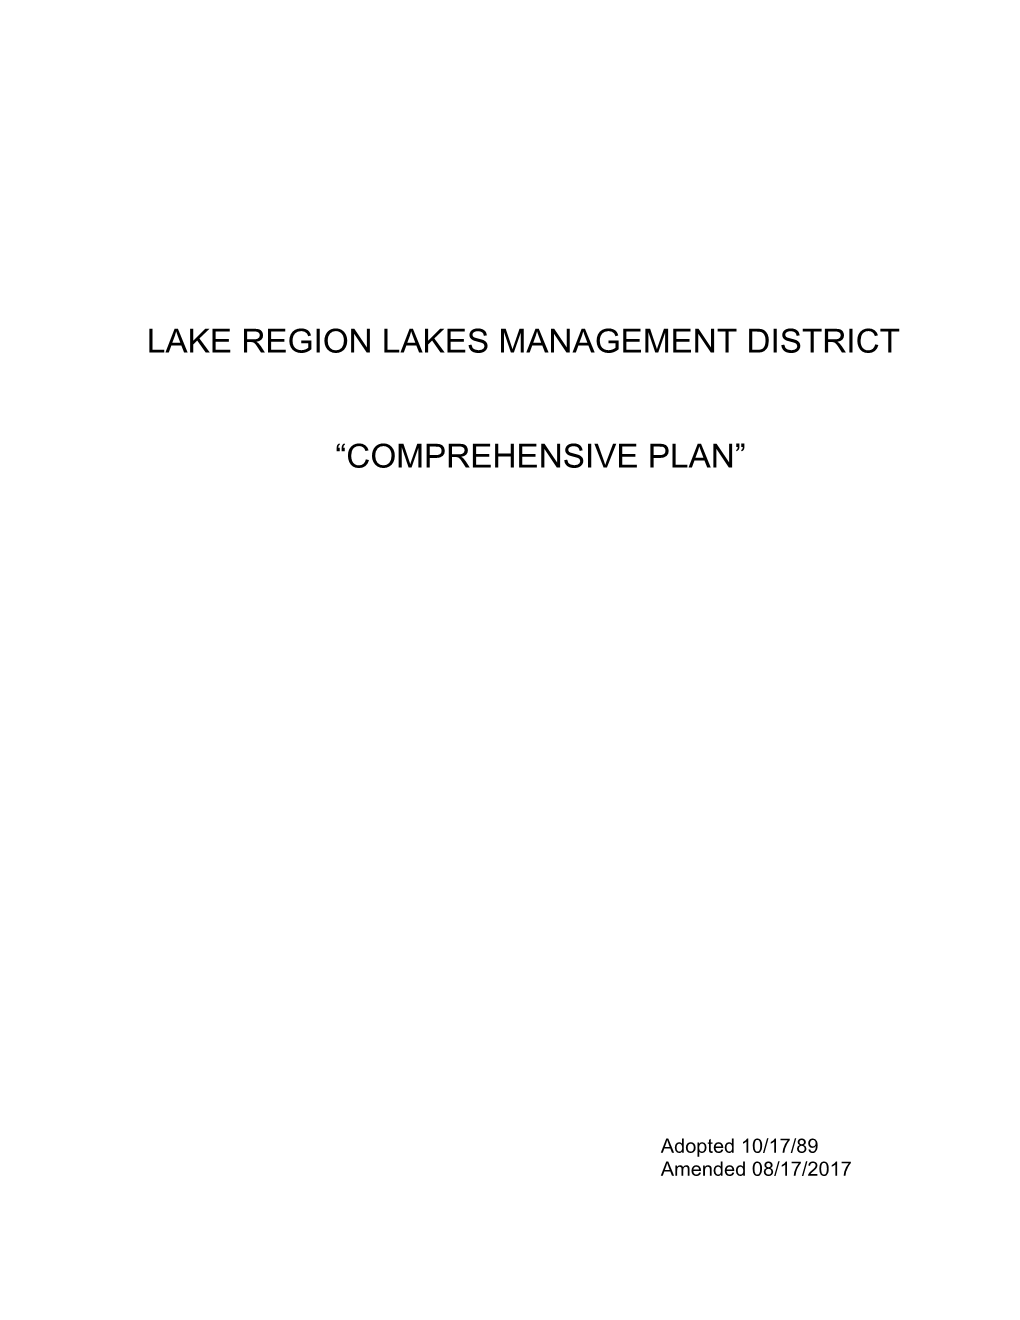 Lake Region Lakes Management District